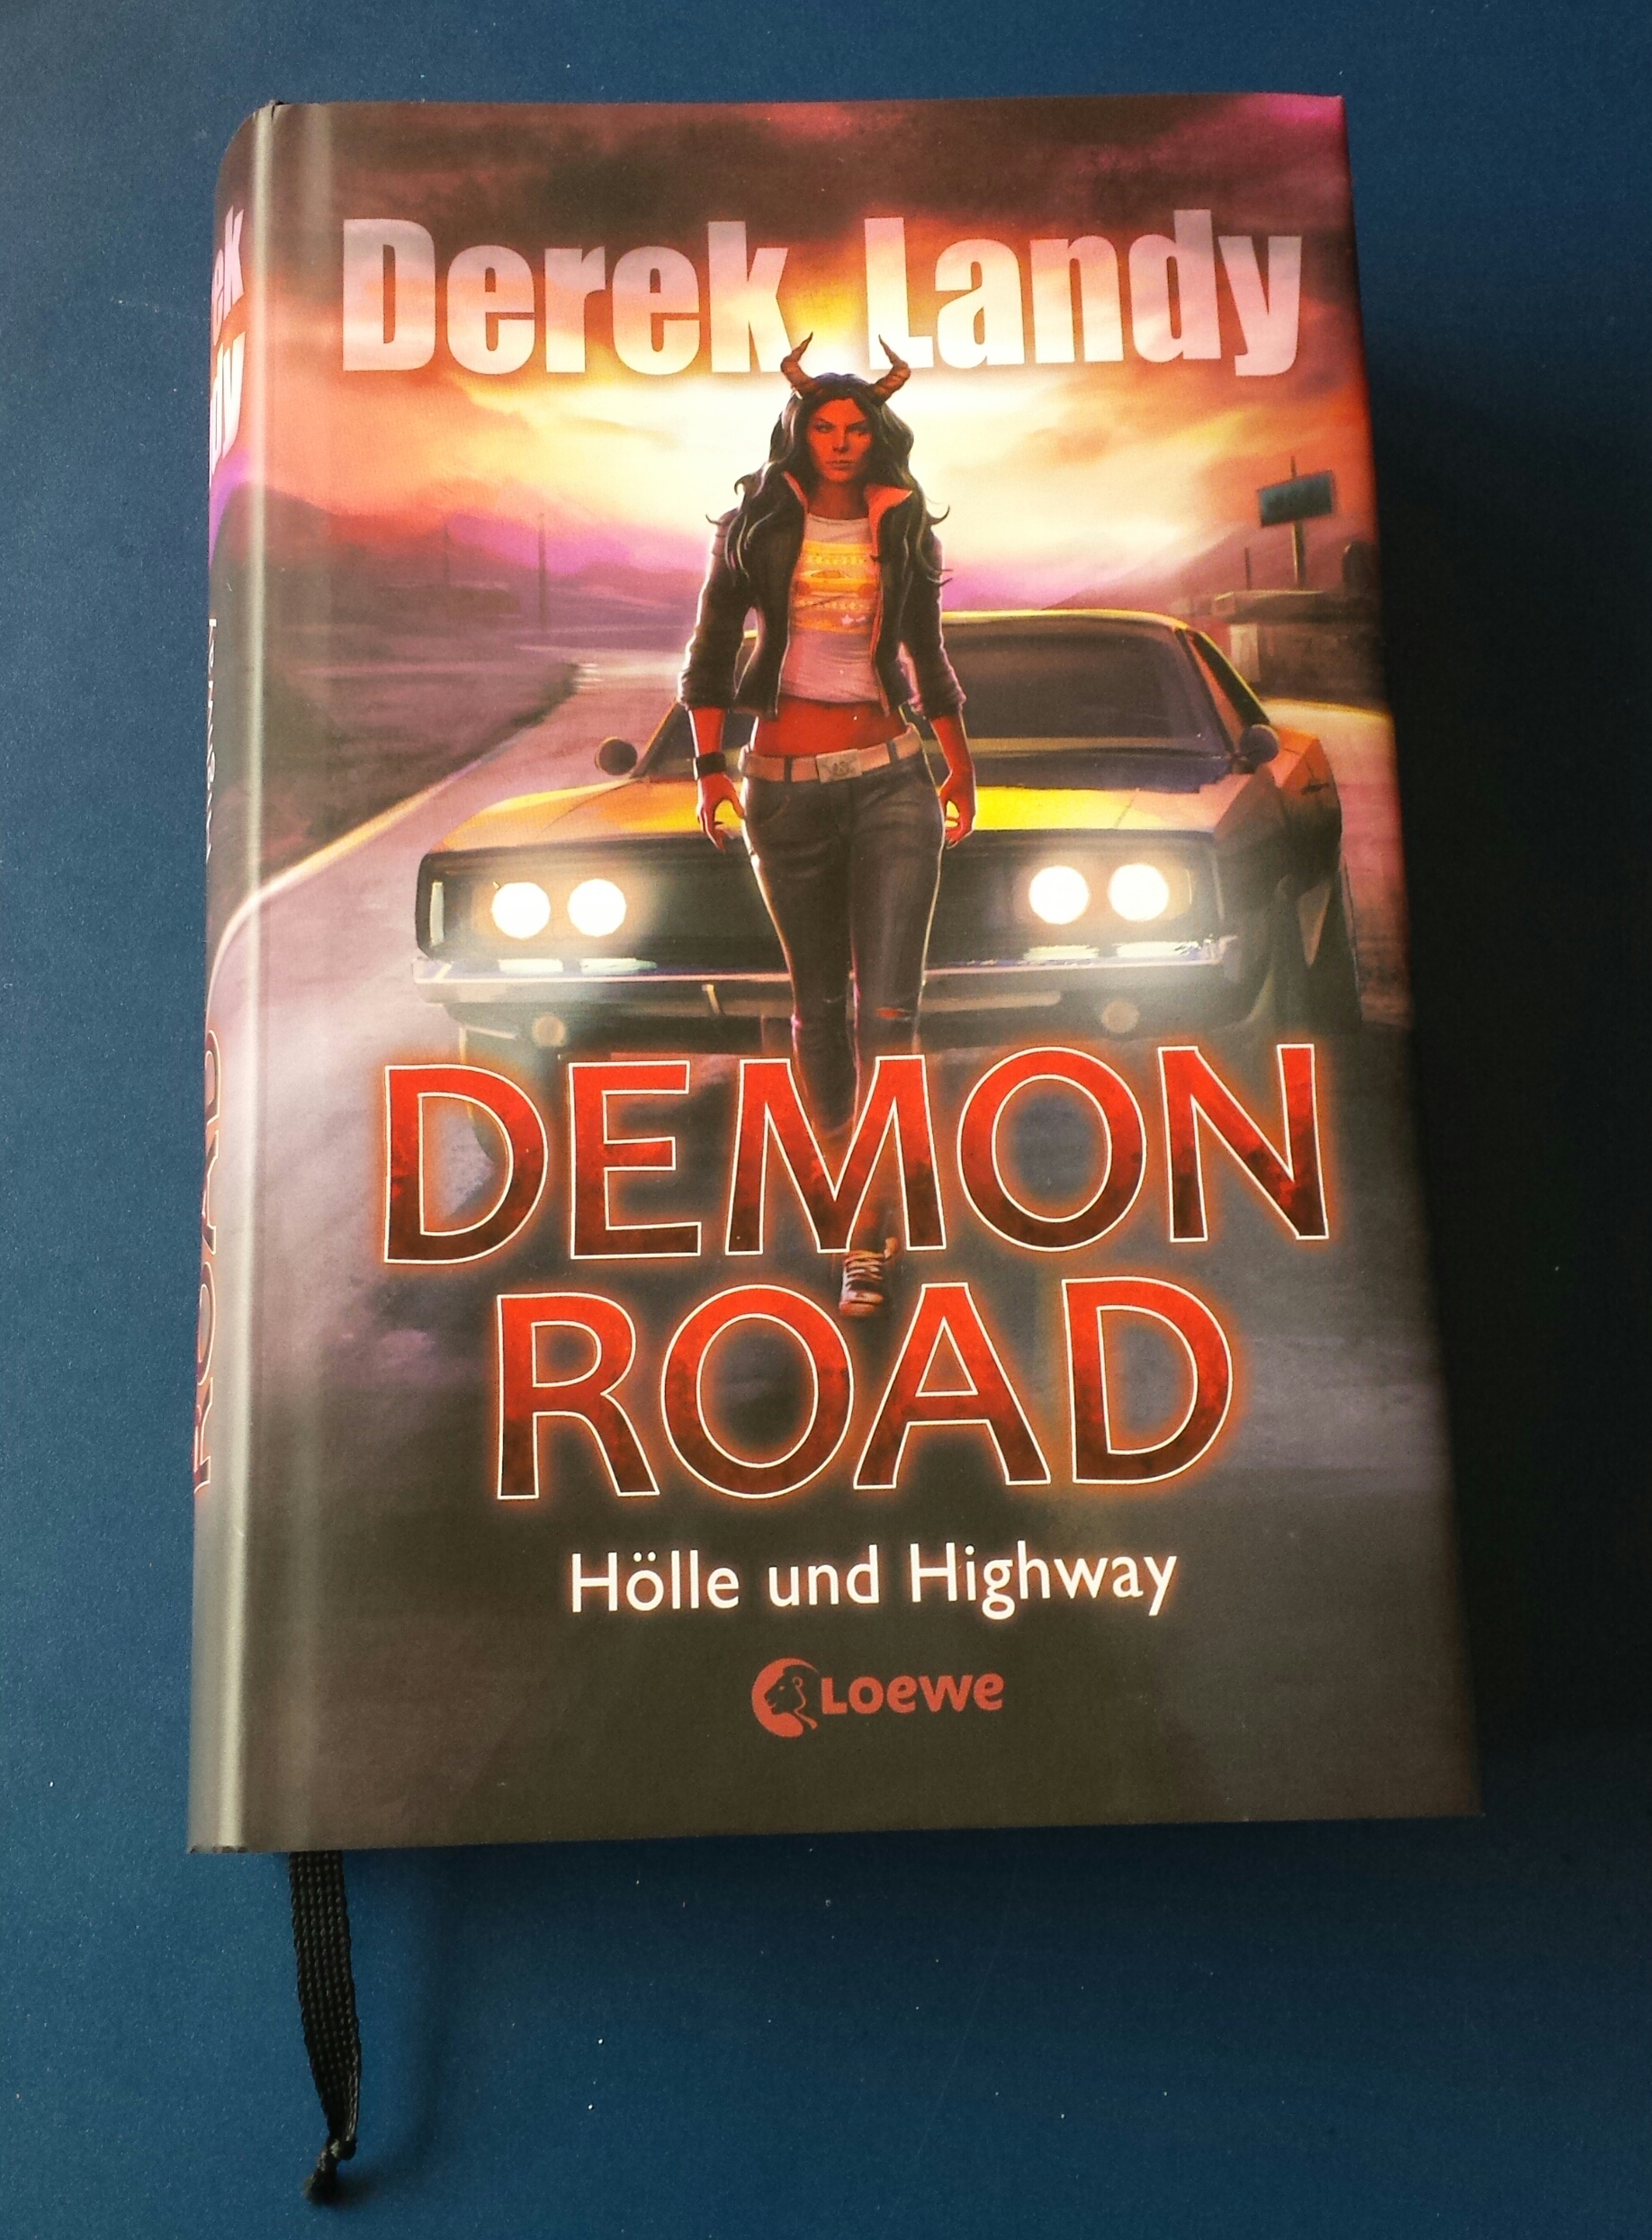 demon-road